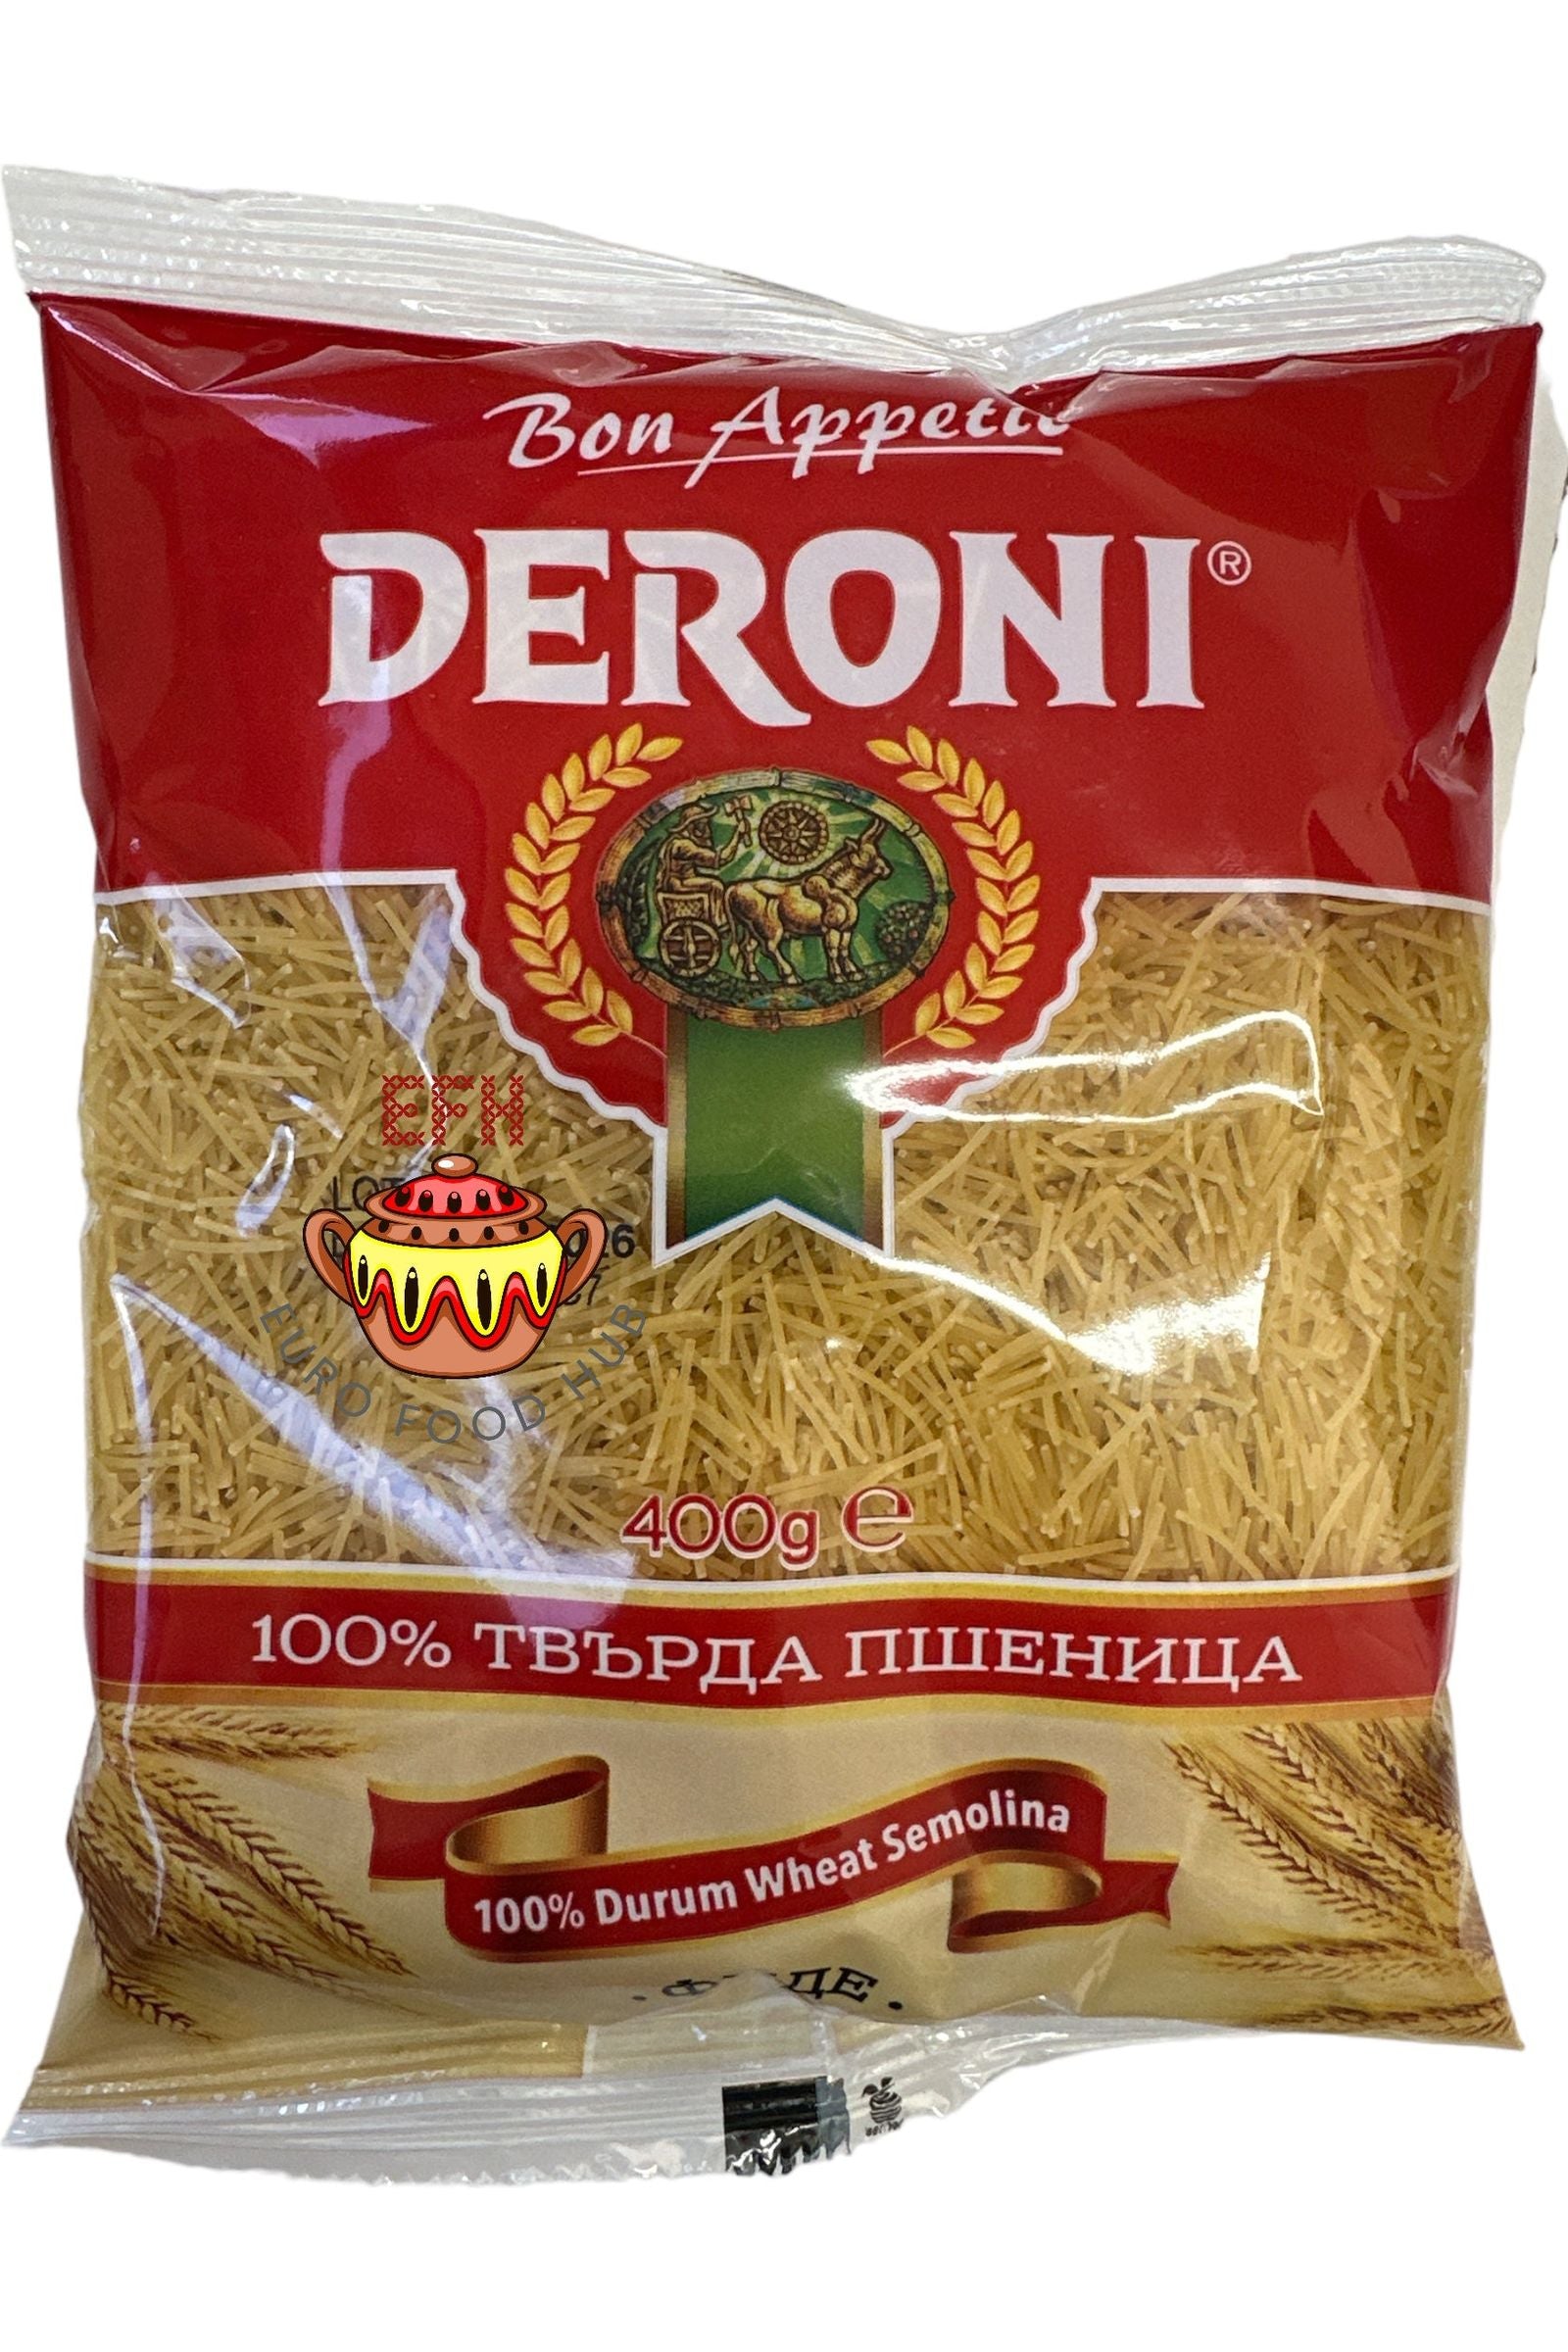 Deroni - Vermicelli - (fide) - Durum Wheat Semolina